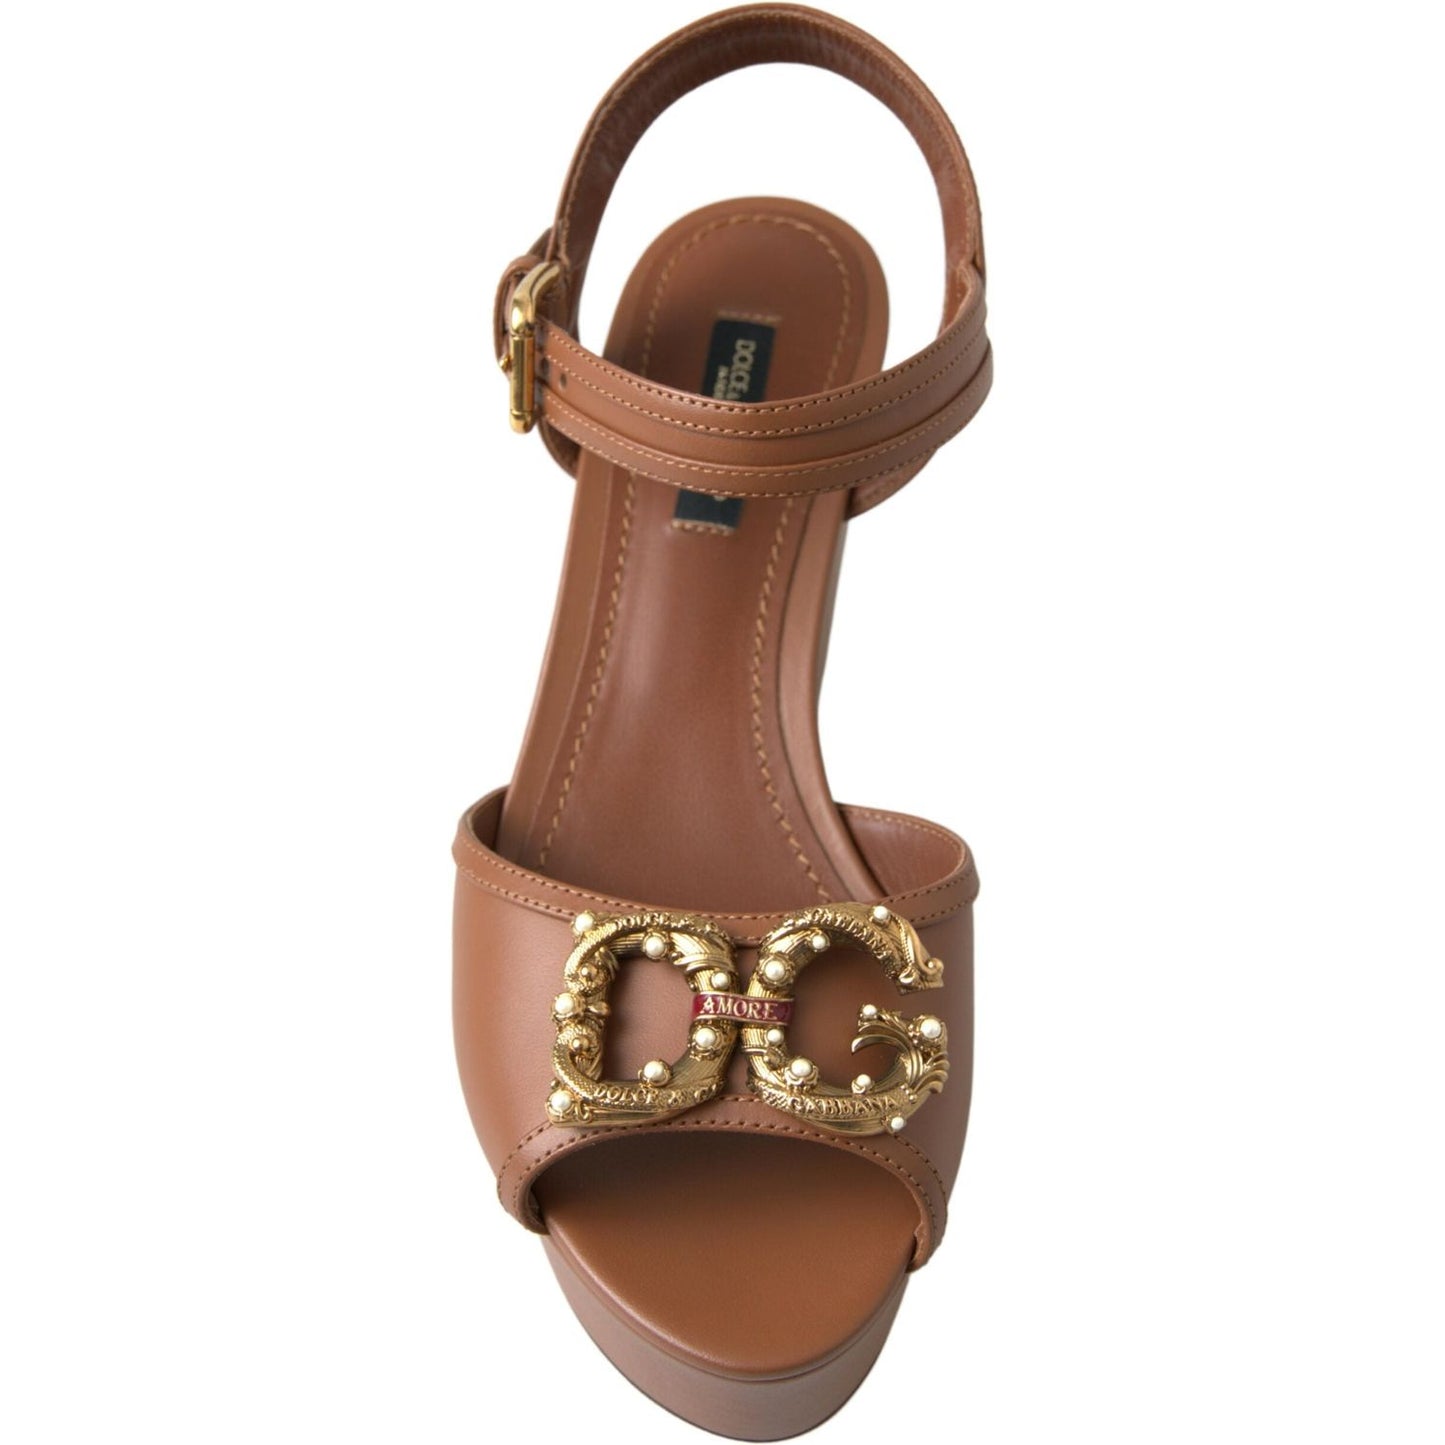 Dolce & Gabbana Chic Brown Leather Ankle Strap Wedges brown-leather-amore-wedges-sandals-shoes 465A0046-scaled-c5cc23b2-557.jpg